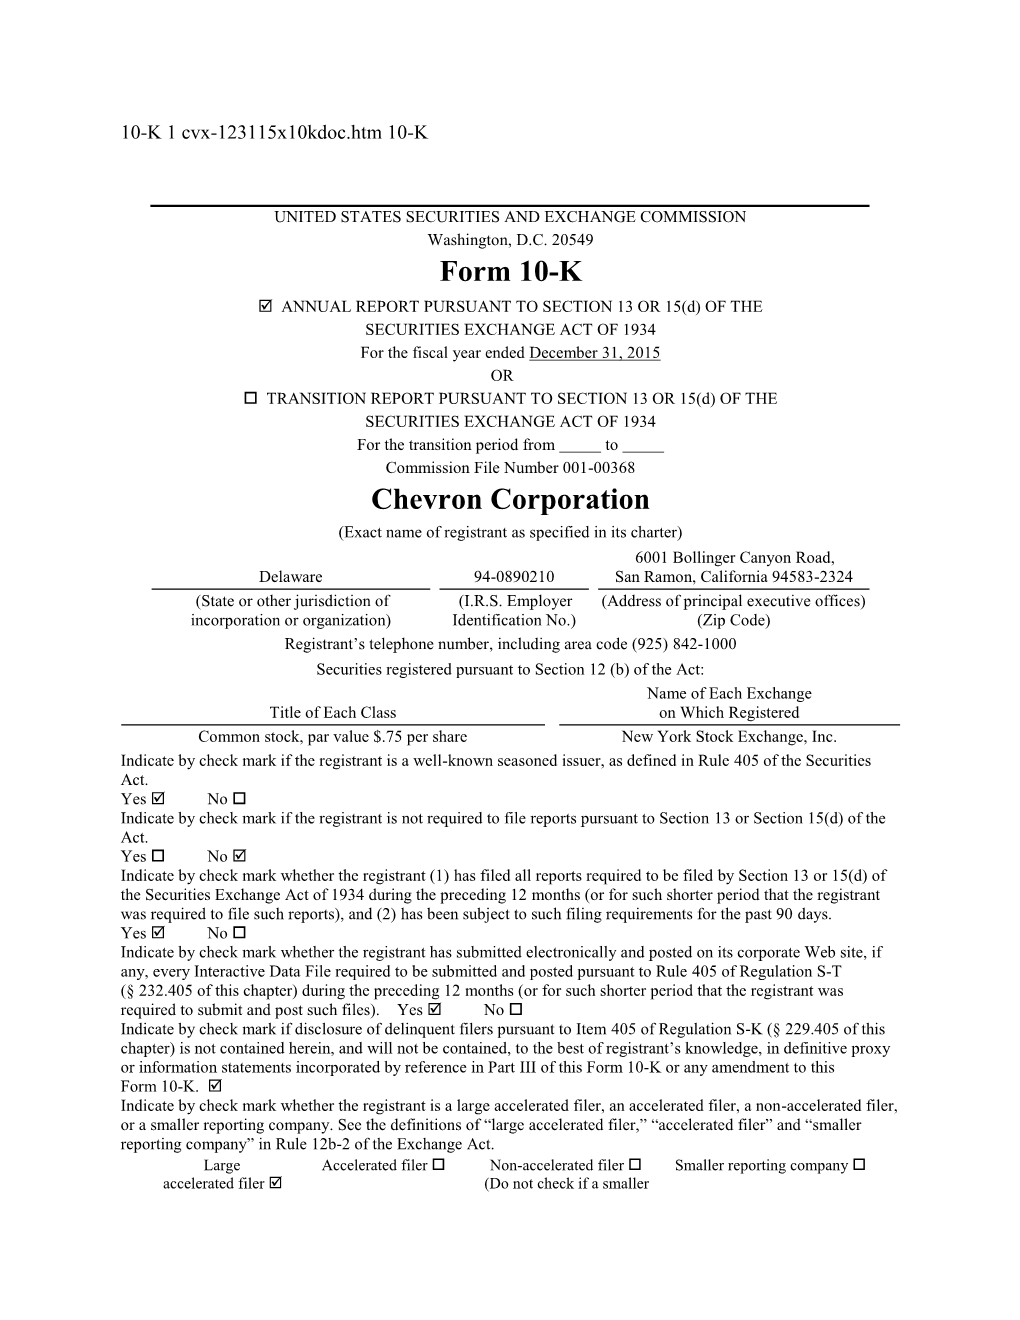 Form 10-K Chevron Corporation